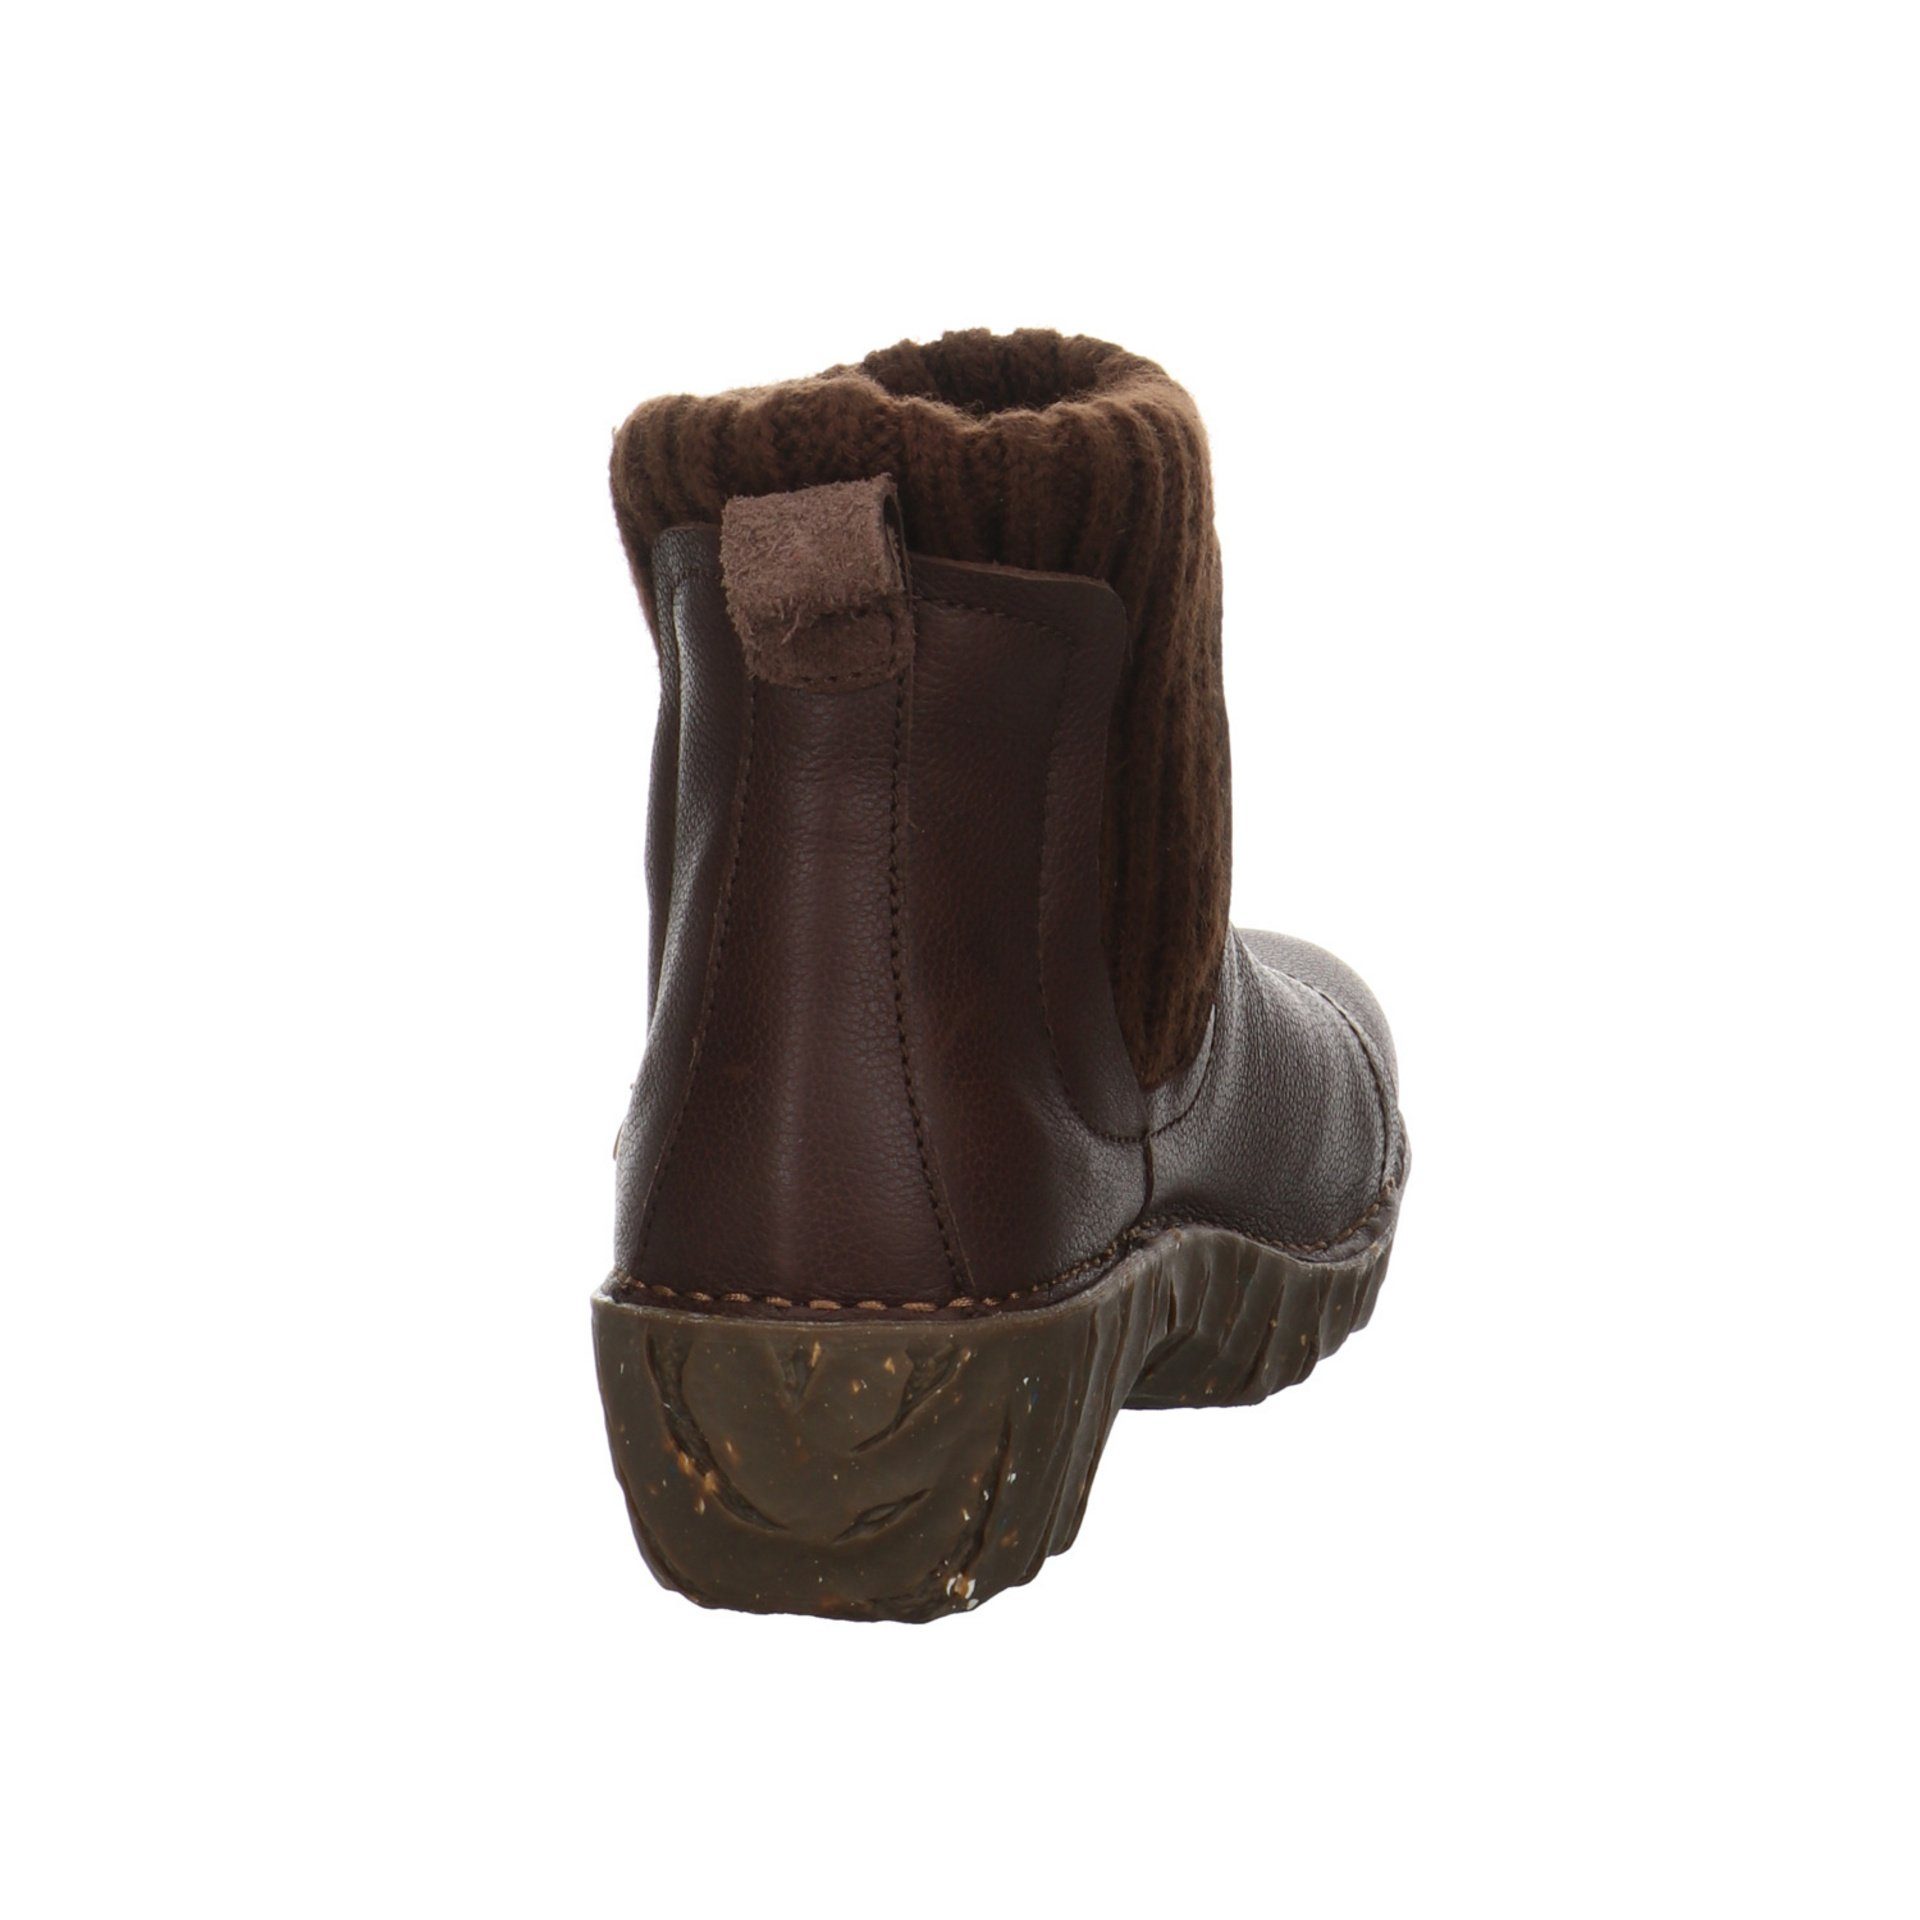 El Naturalista Damen Stiefel Schuhe Boots Glattleder Stiefel brown Yggdrasil